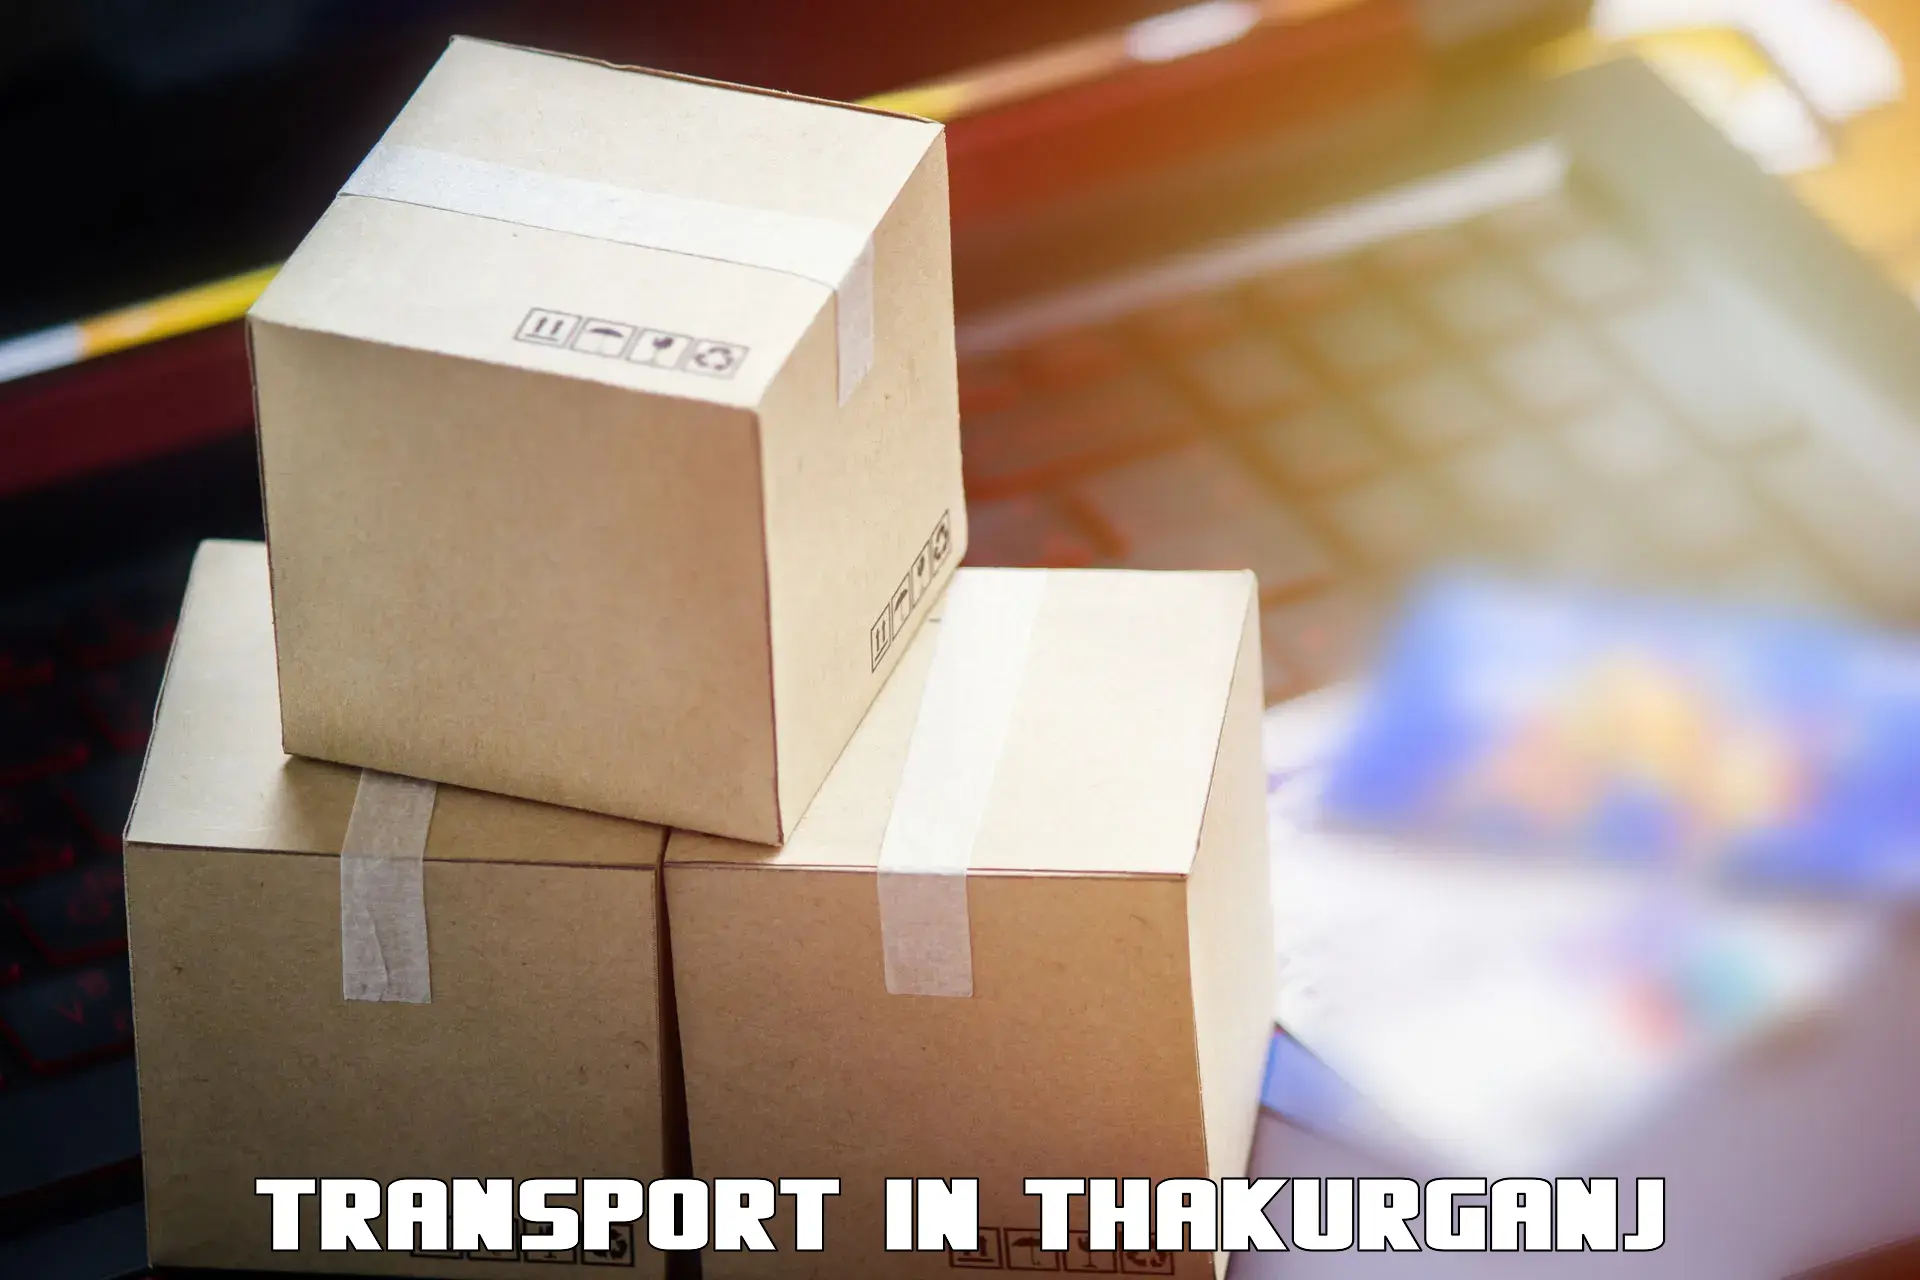 Transport shared services in Thakurganj